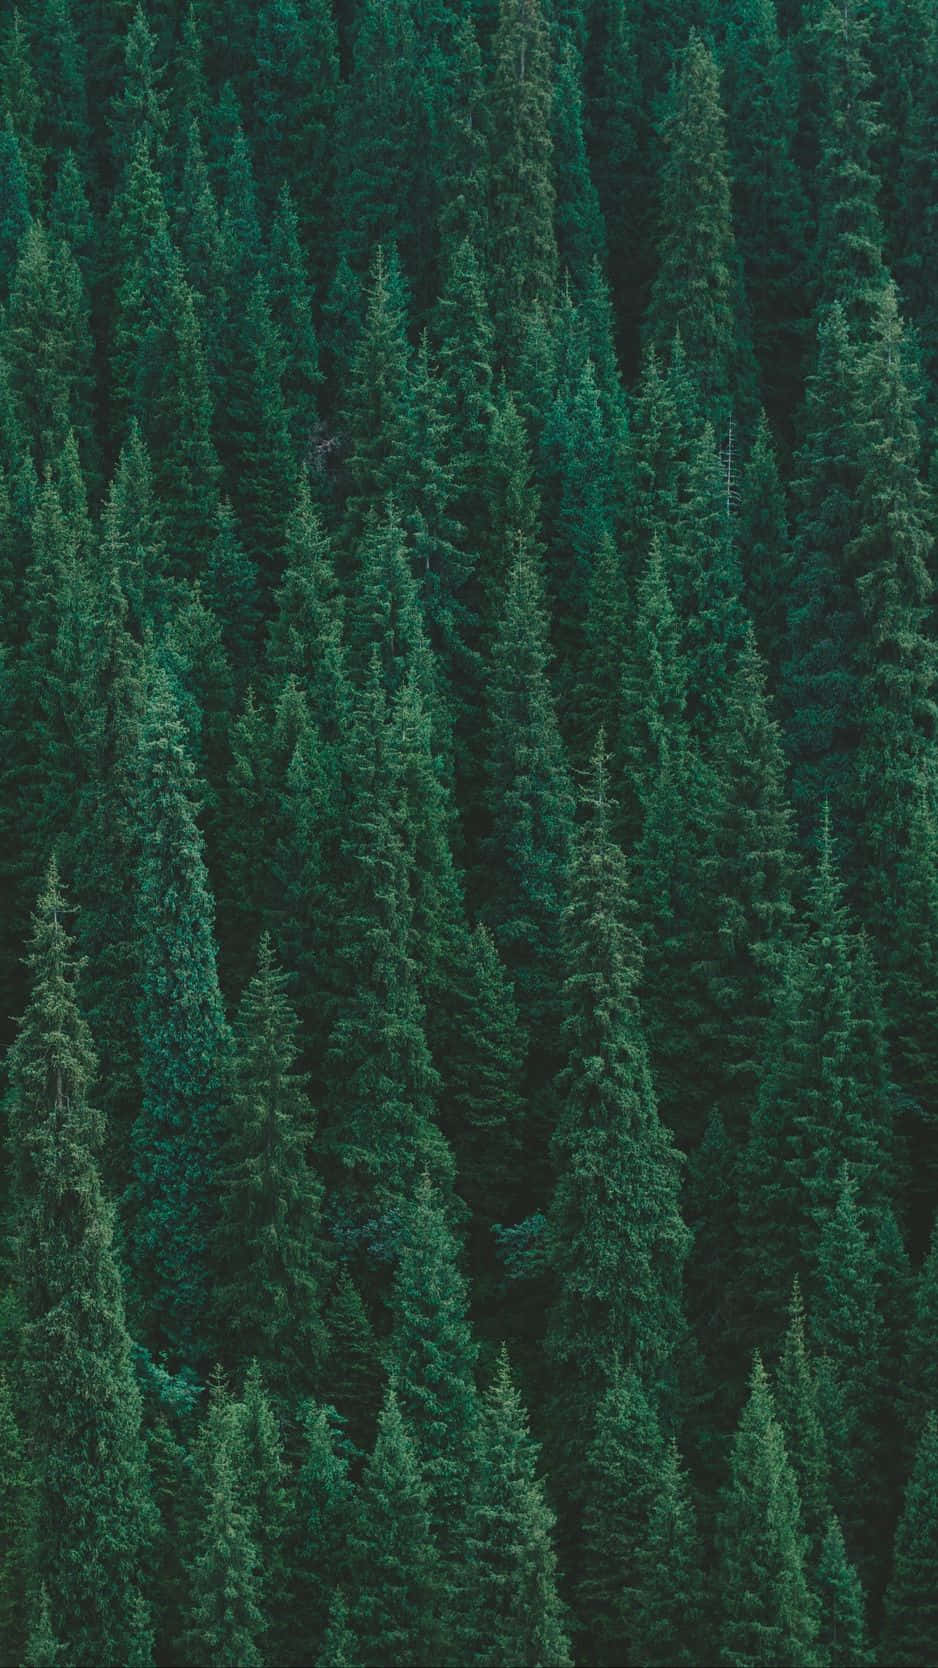 Explore Nature's Splendors with Trees iPhone Wallpaper